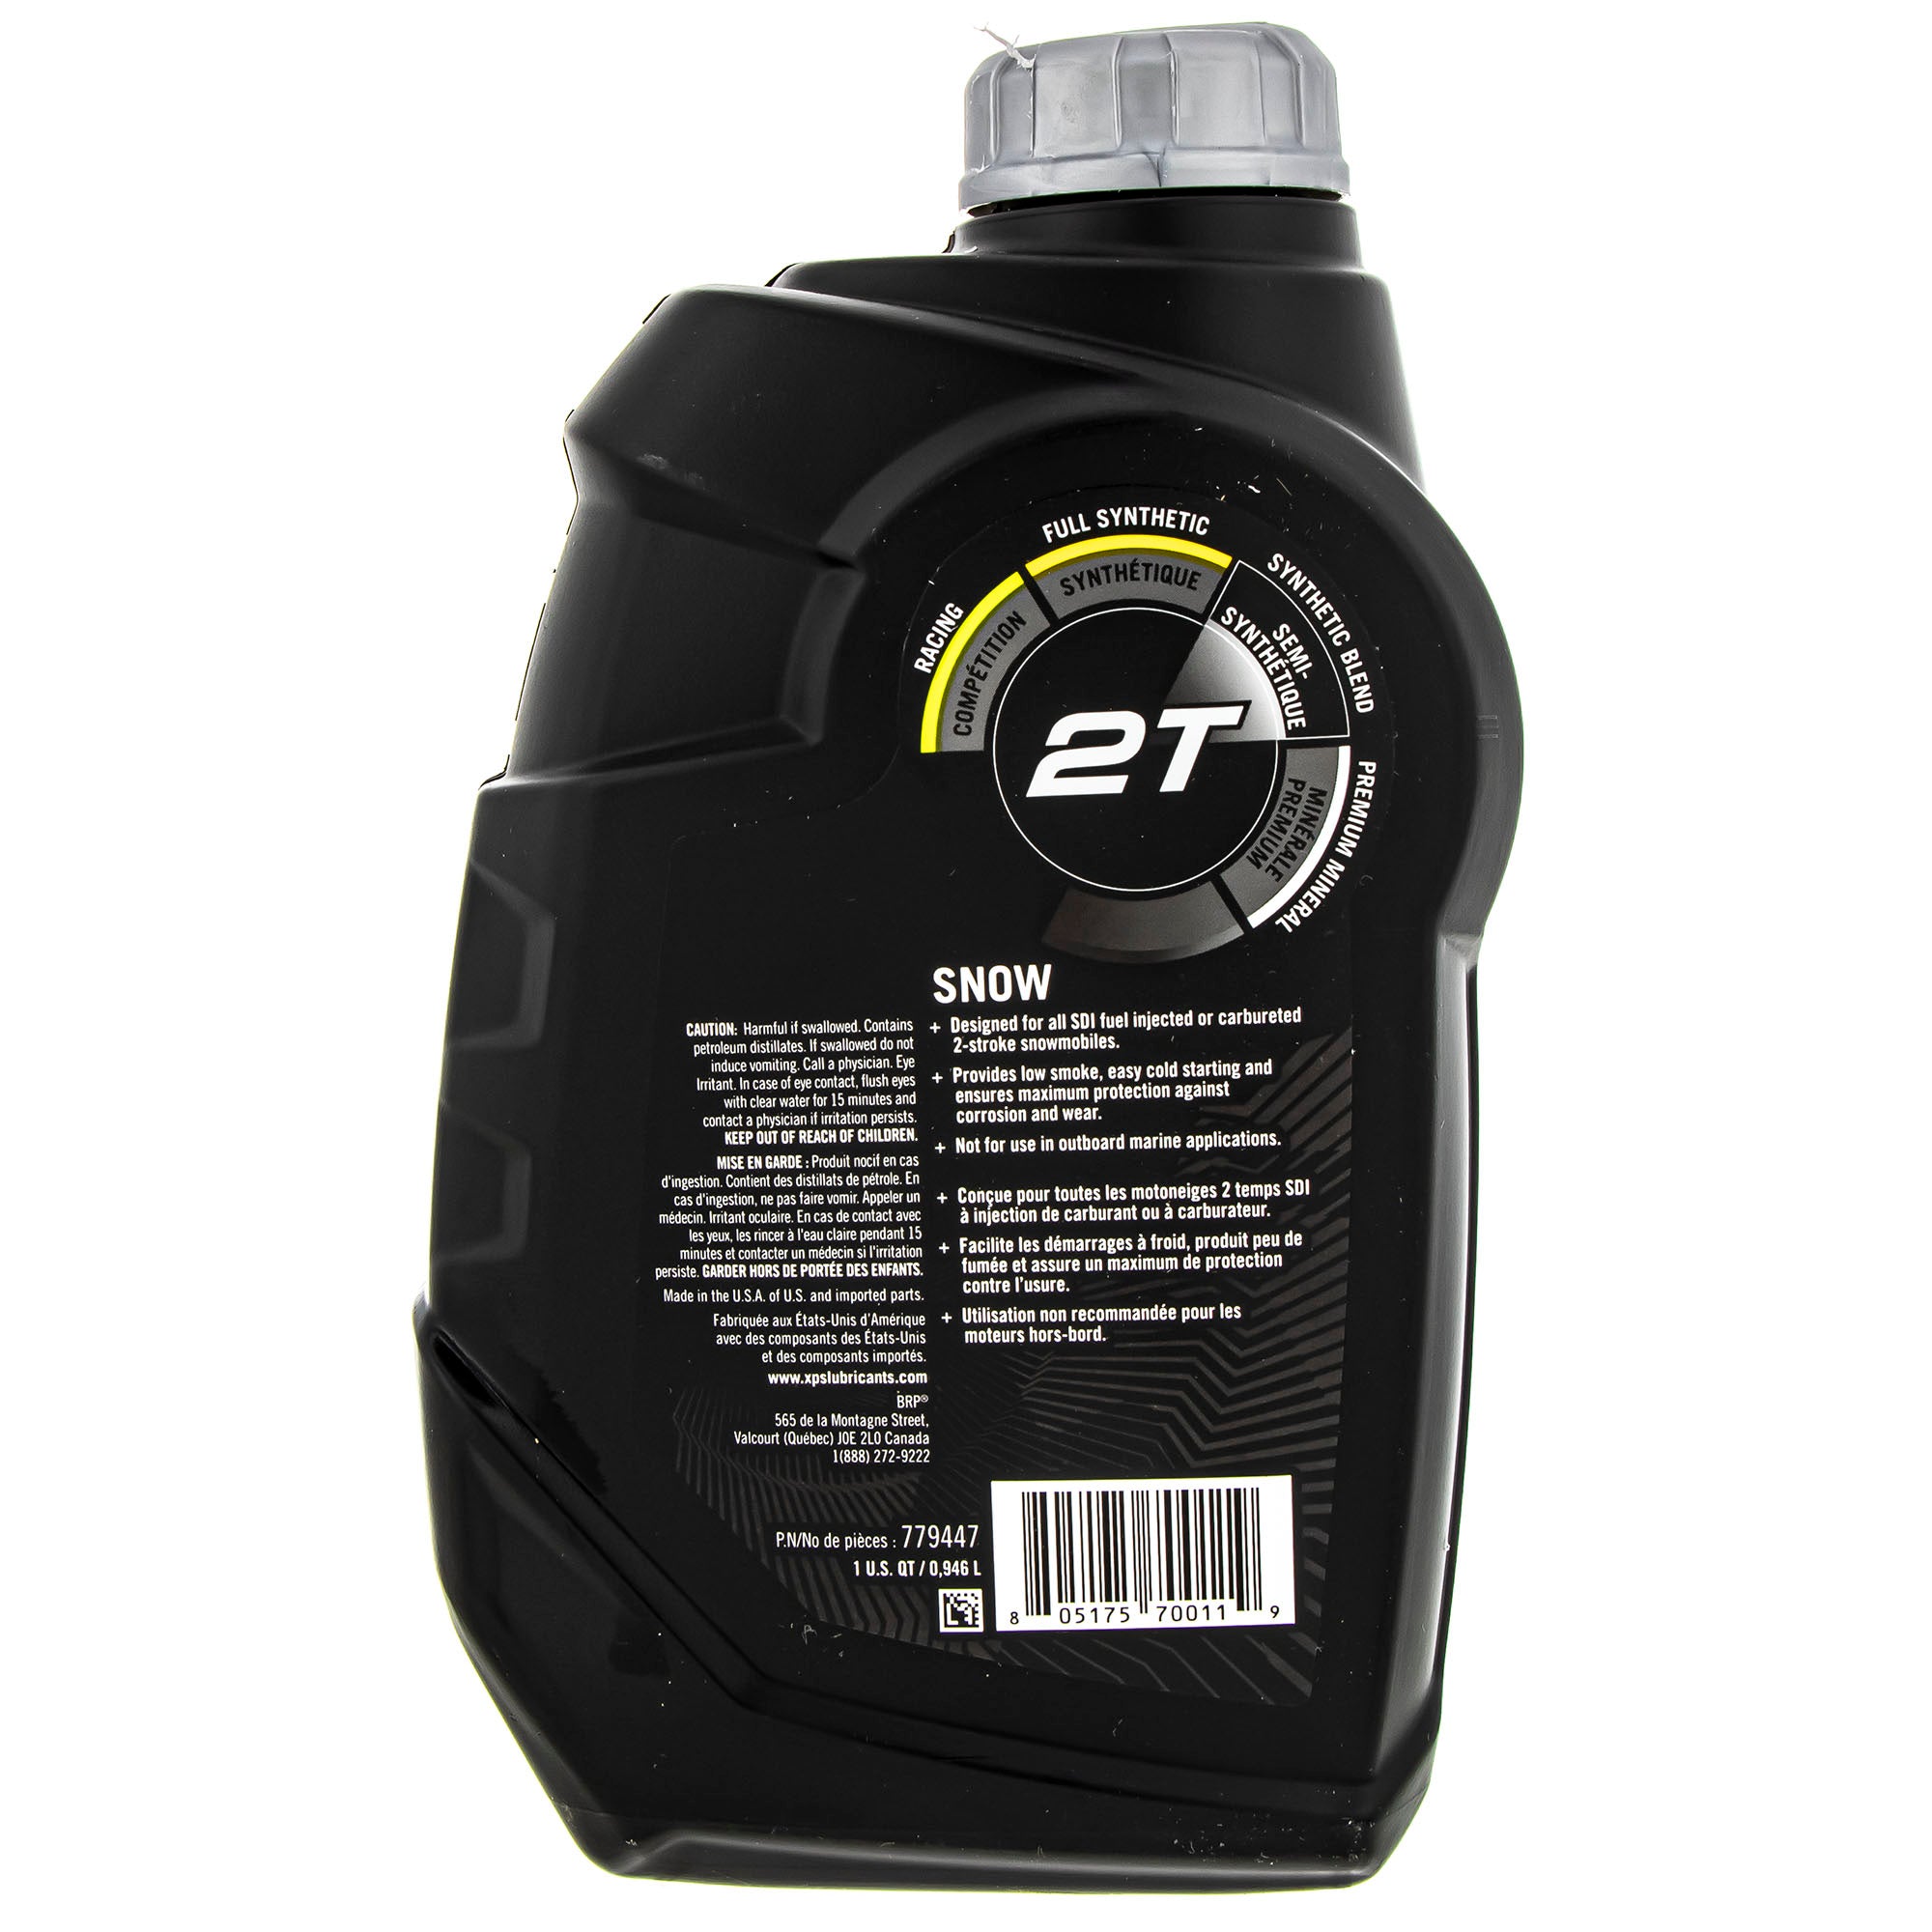 Ski-Doo 2T Synthetic Blend Oil 1 QT 779447